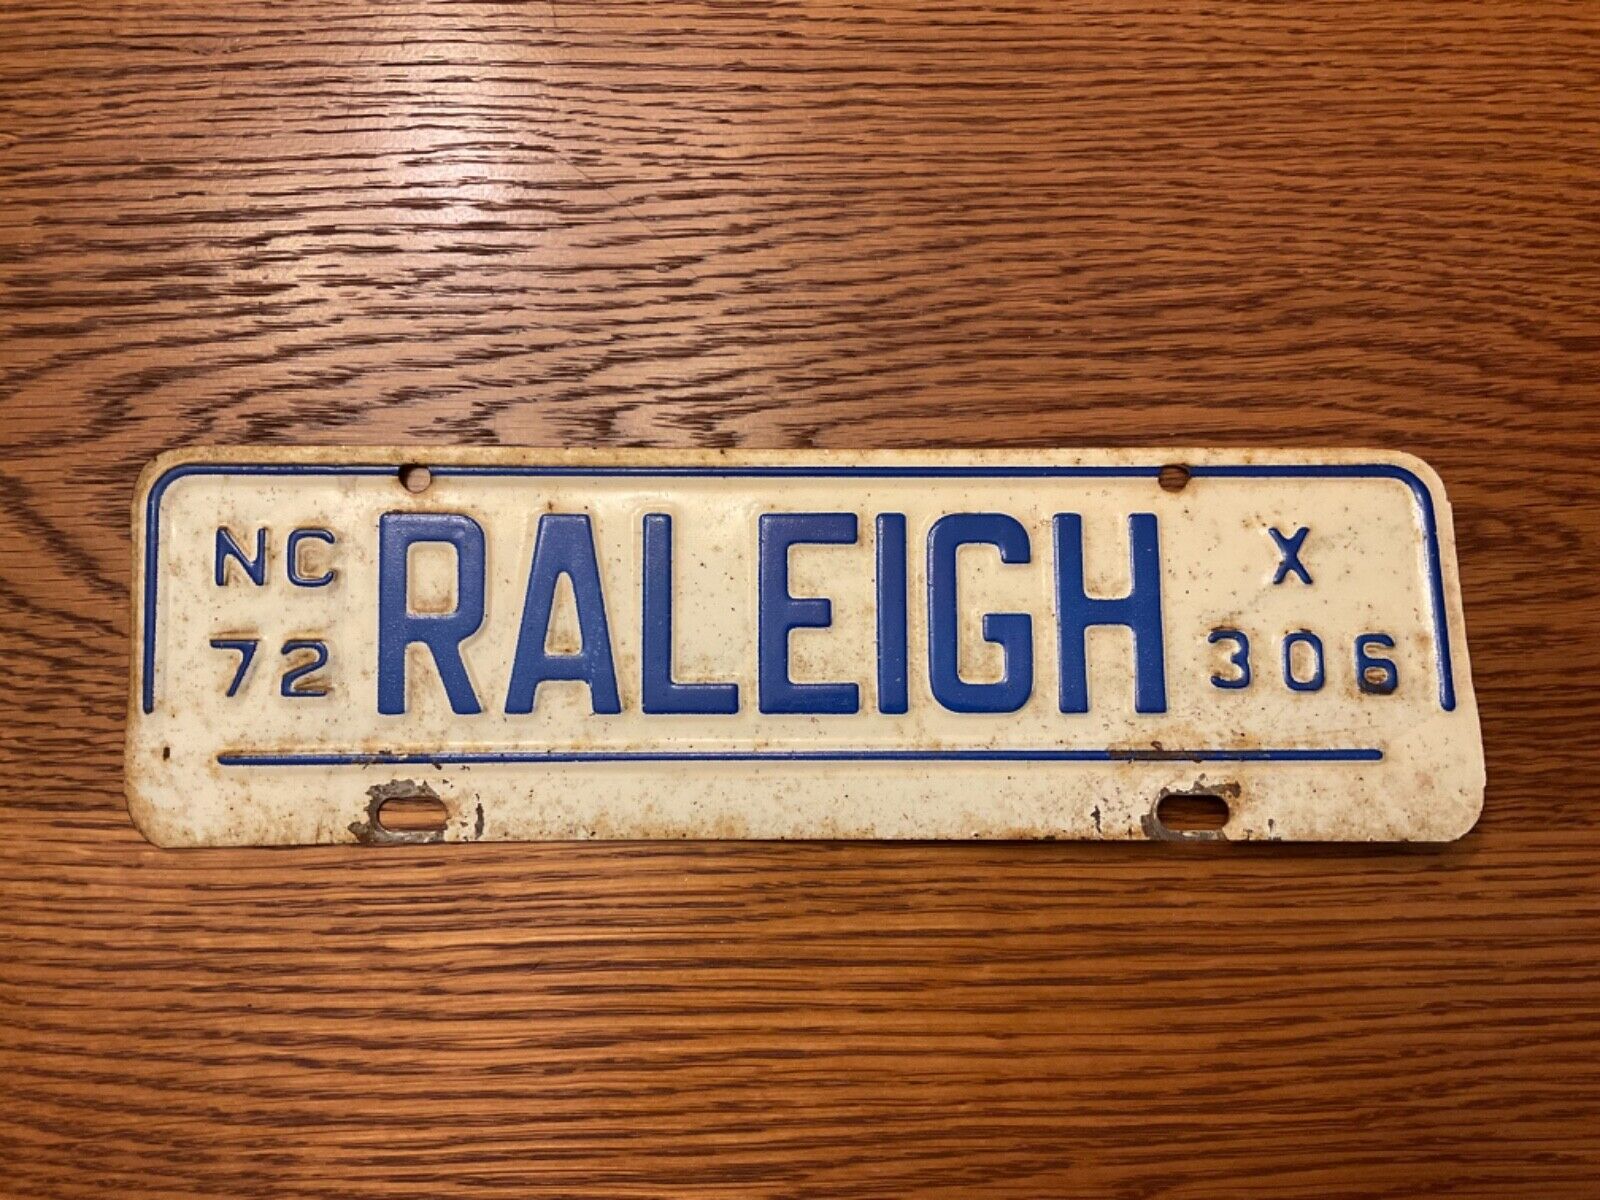 North Carolina City of Raleigh 1972 License Plate #306